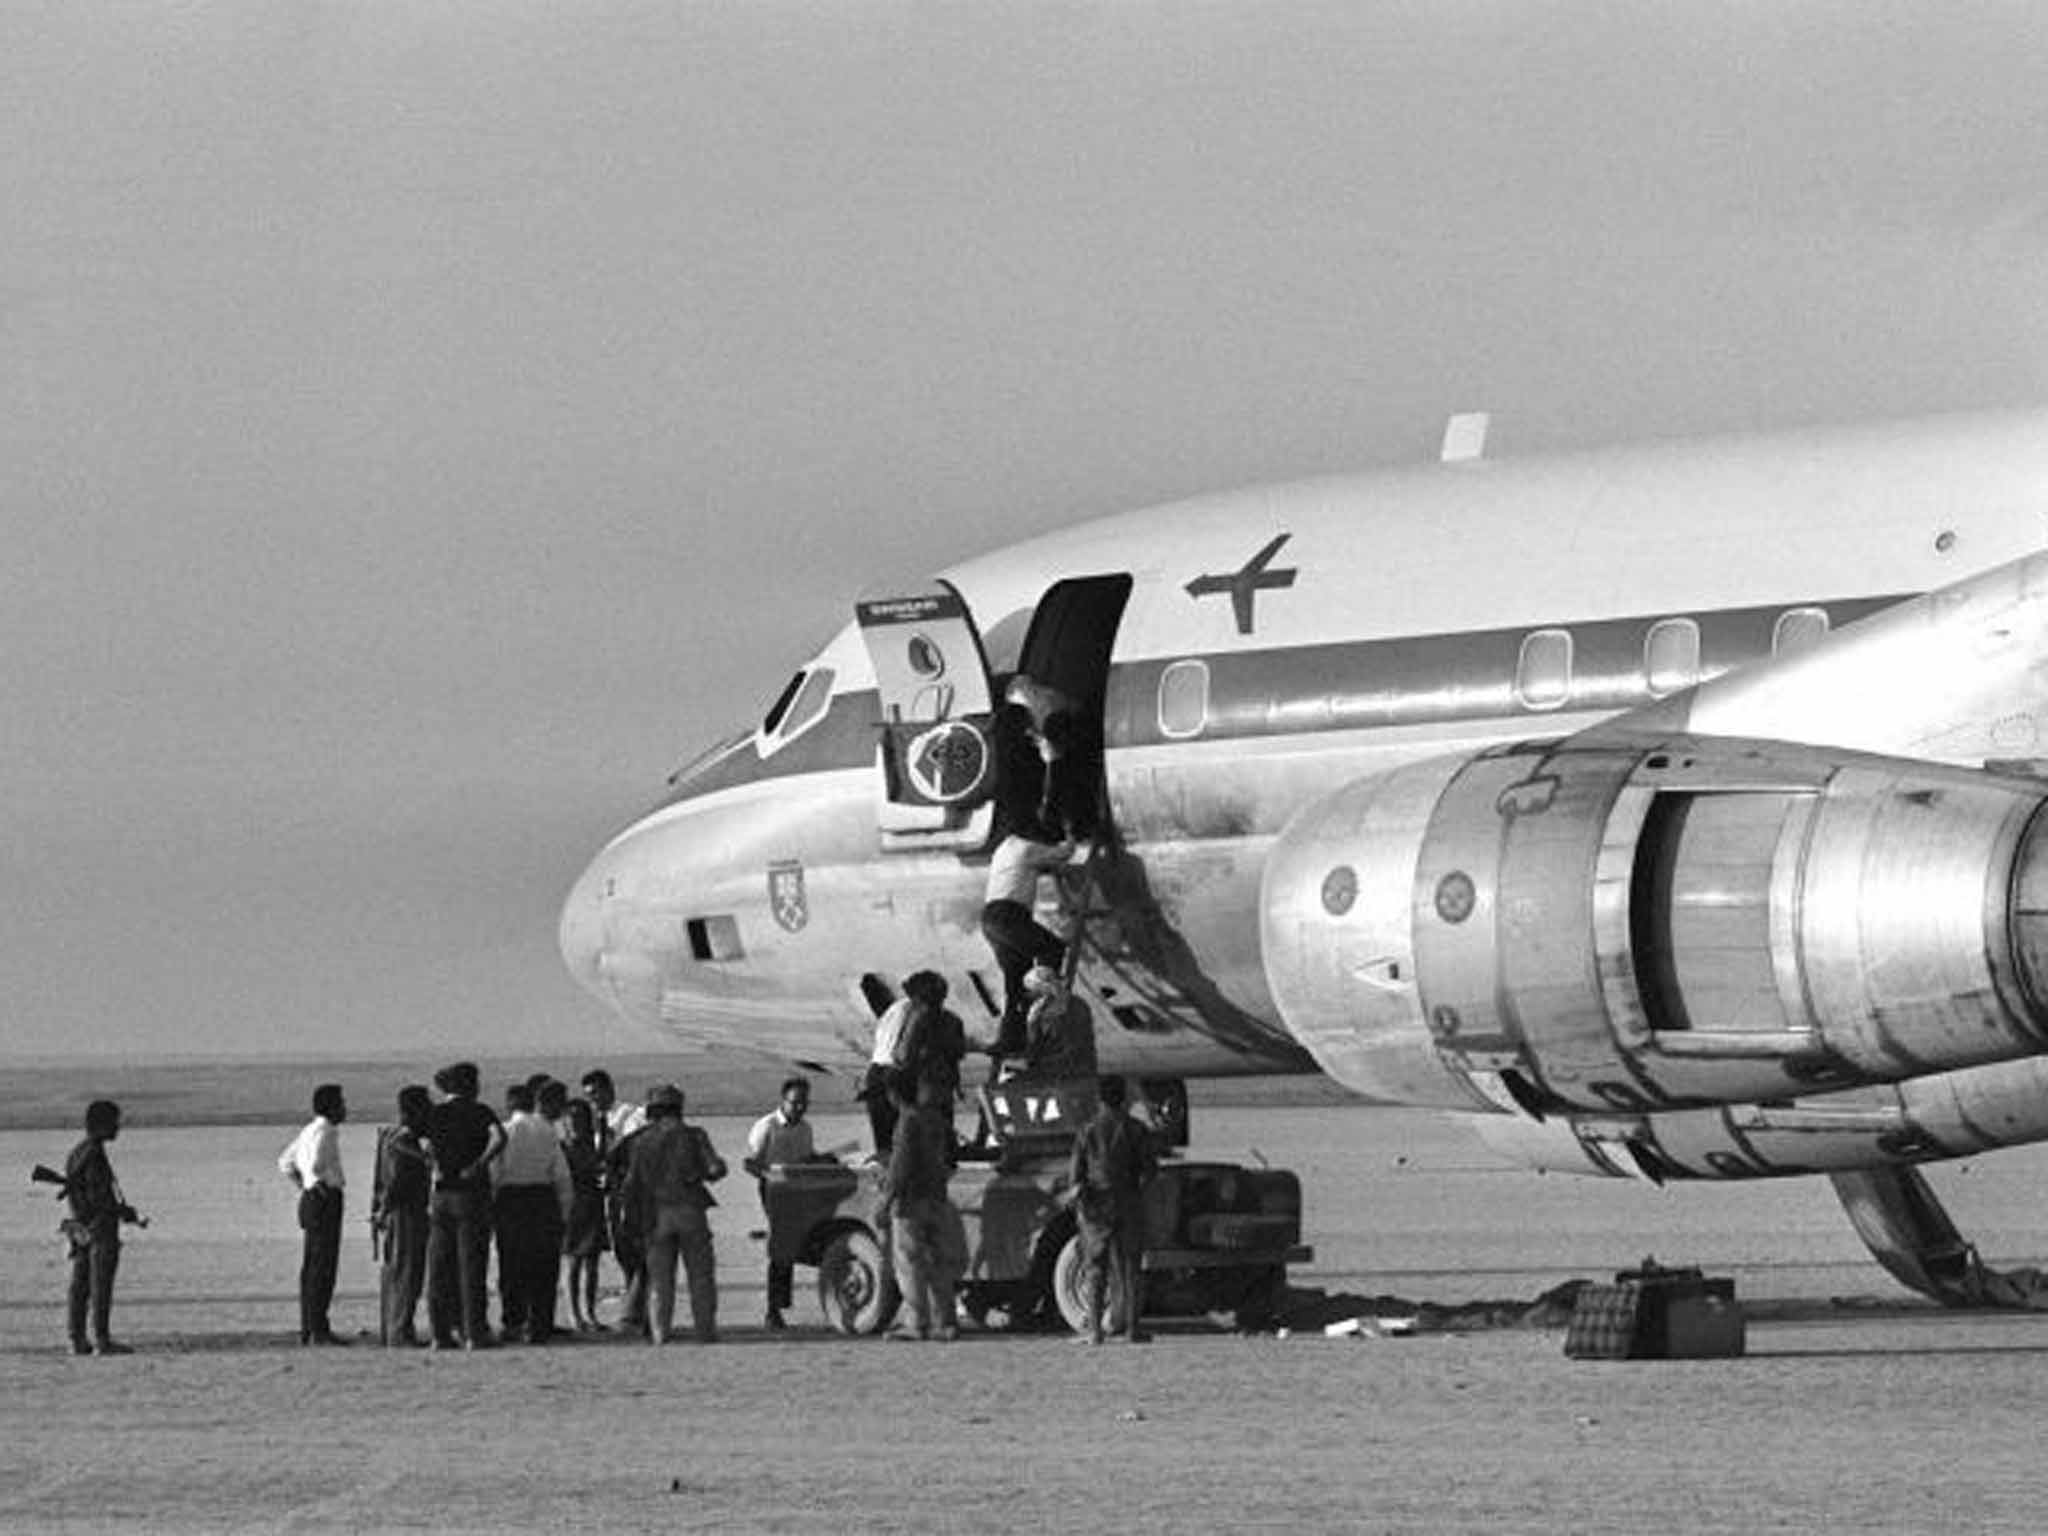 Flight to nowhere: the Swissair plane in the desert in 1970